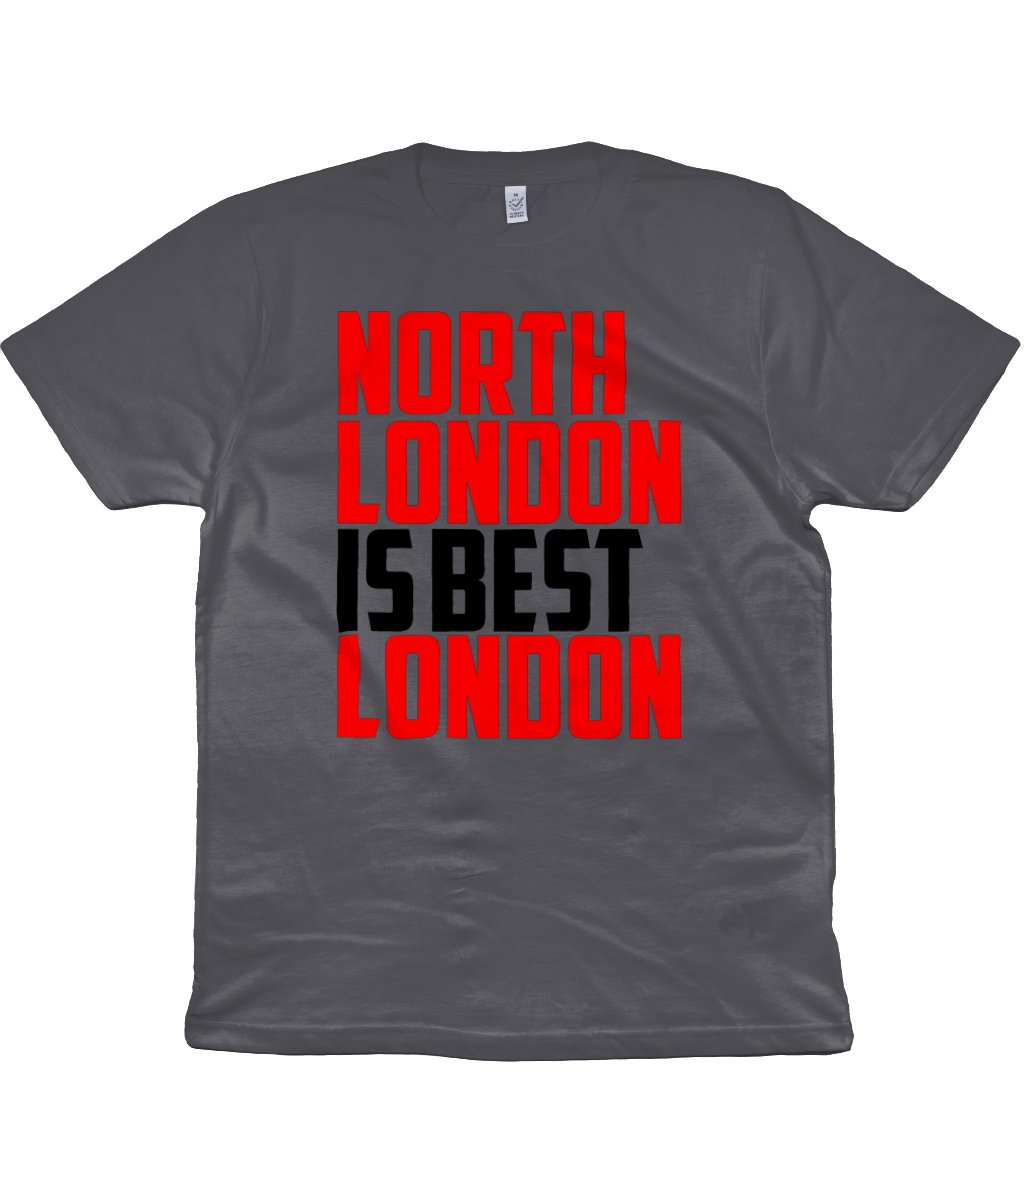 North London is Best London